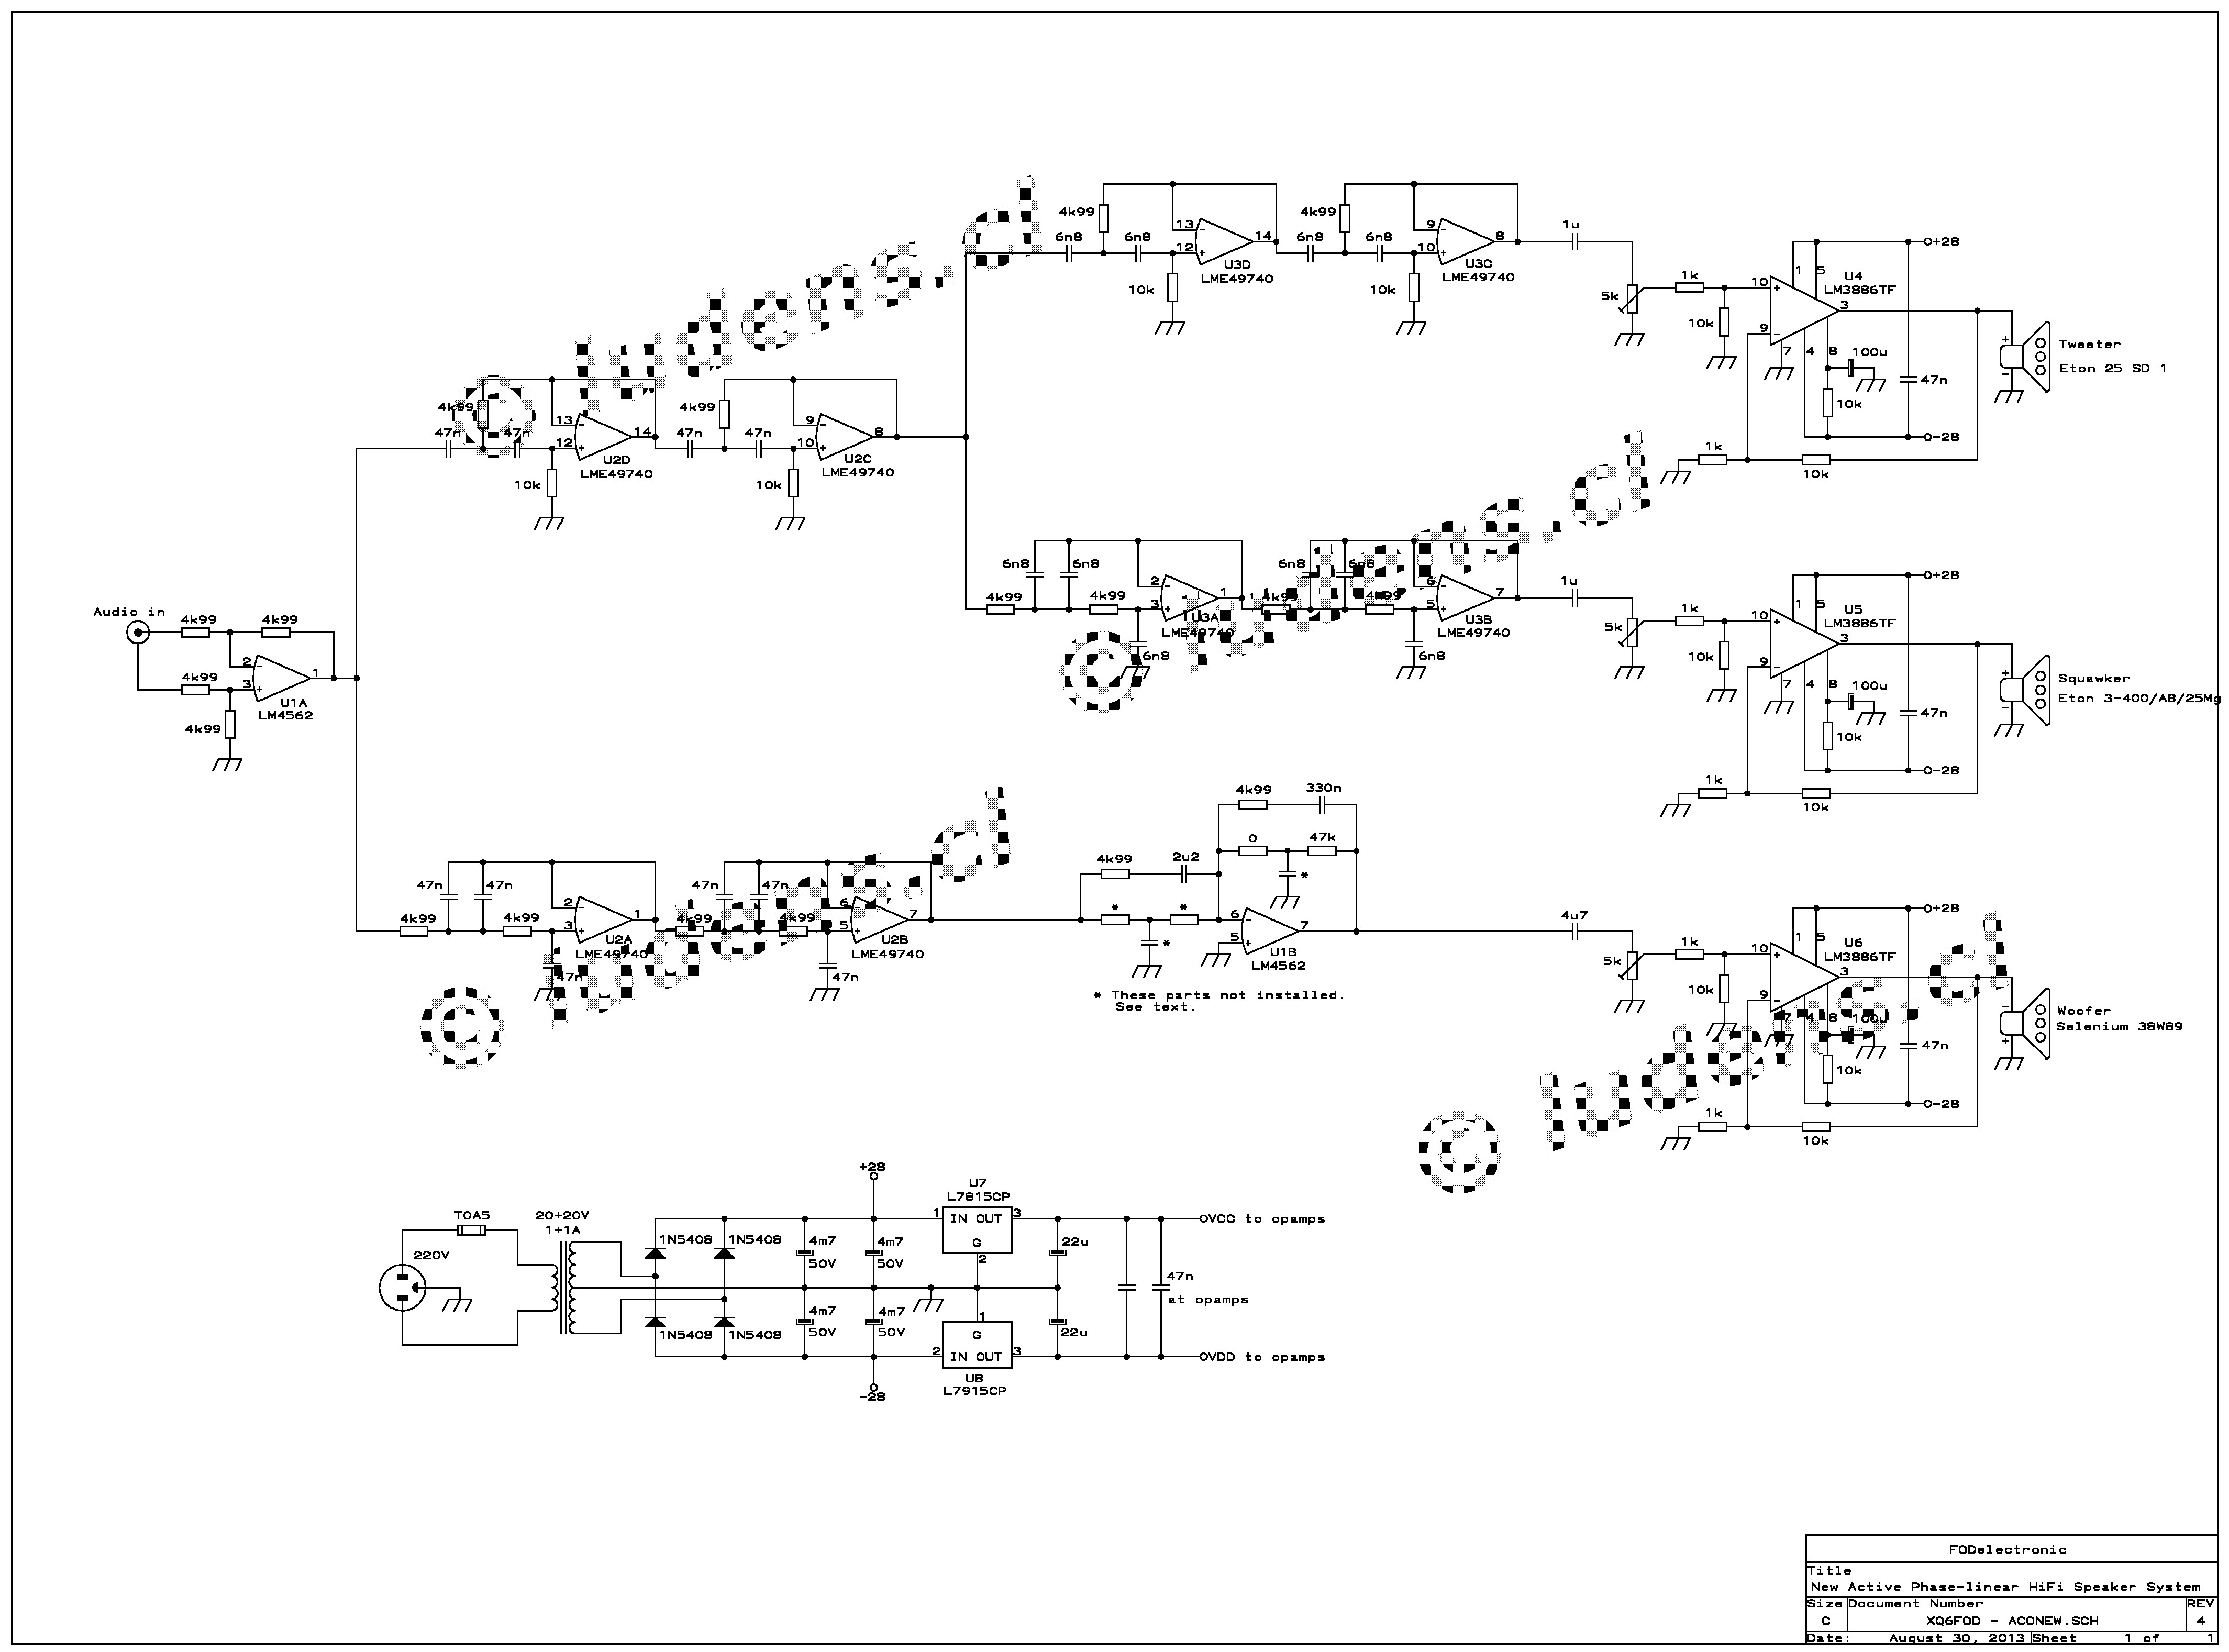 Car Subwoofer Circuit Diagram Car Subwoofer Crossover Circuit Schematic Diagram Wiring Diagram Go Of Car Subwoofer Circuit Diagram